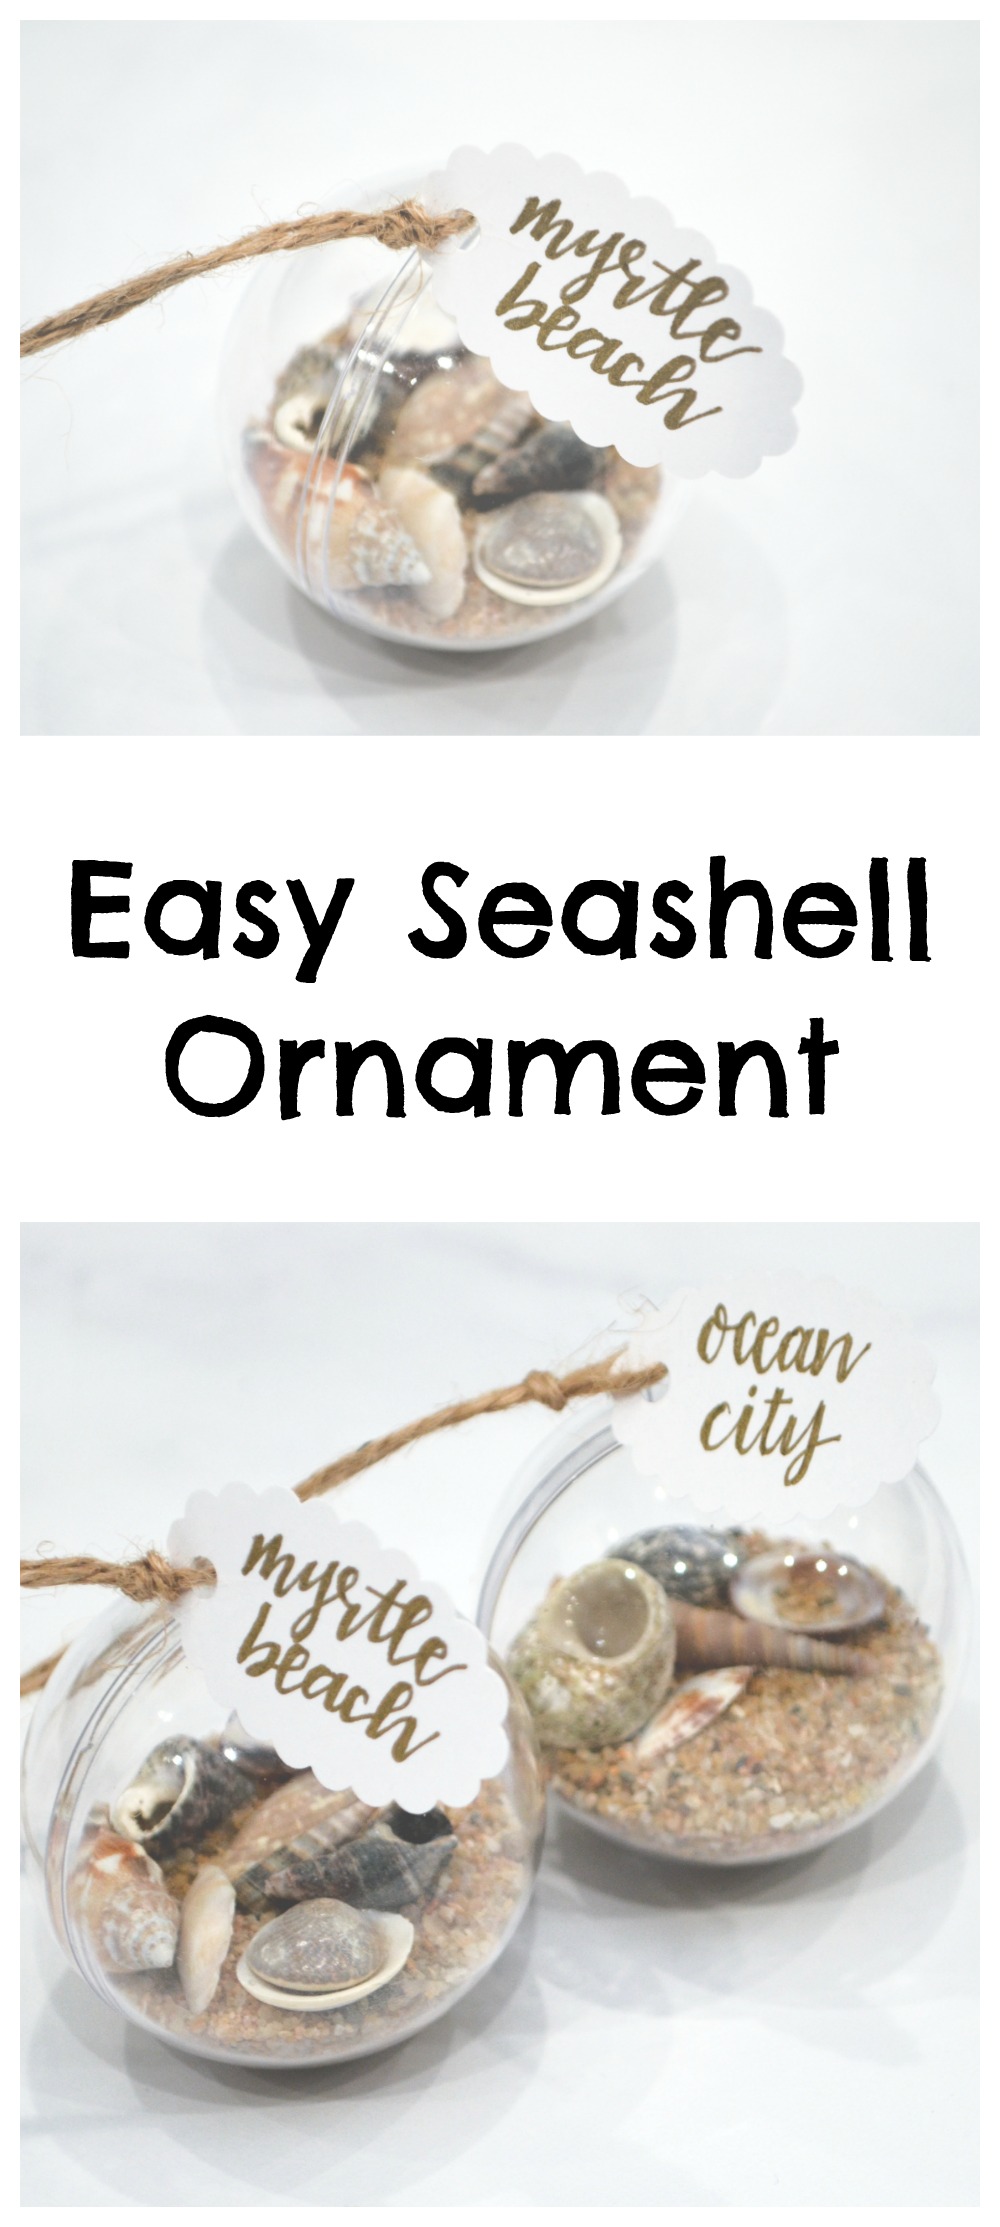 Easy Seashell Ornament